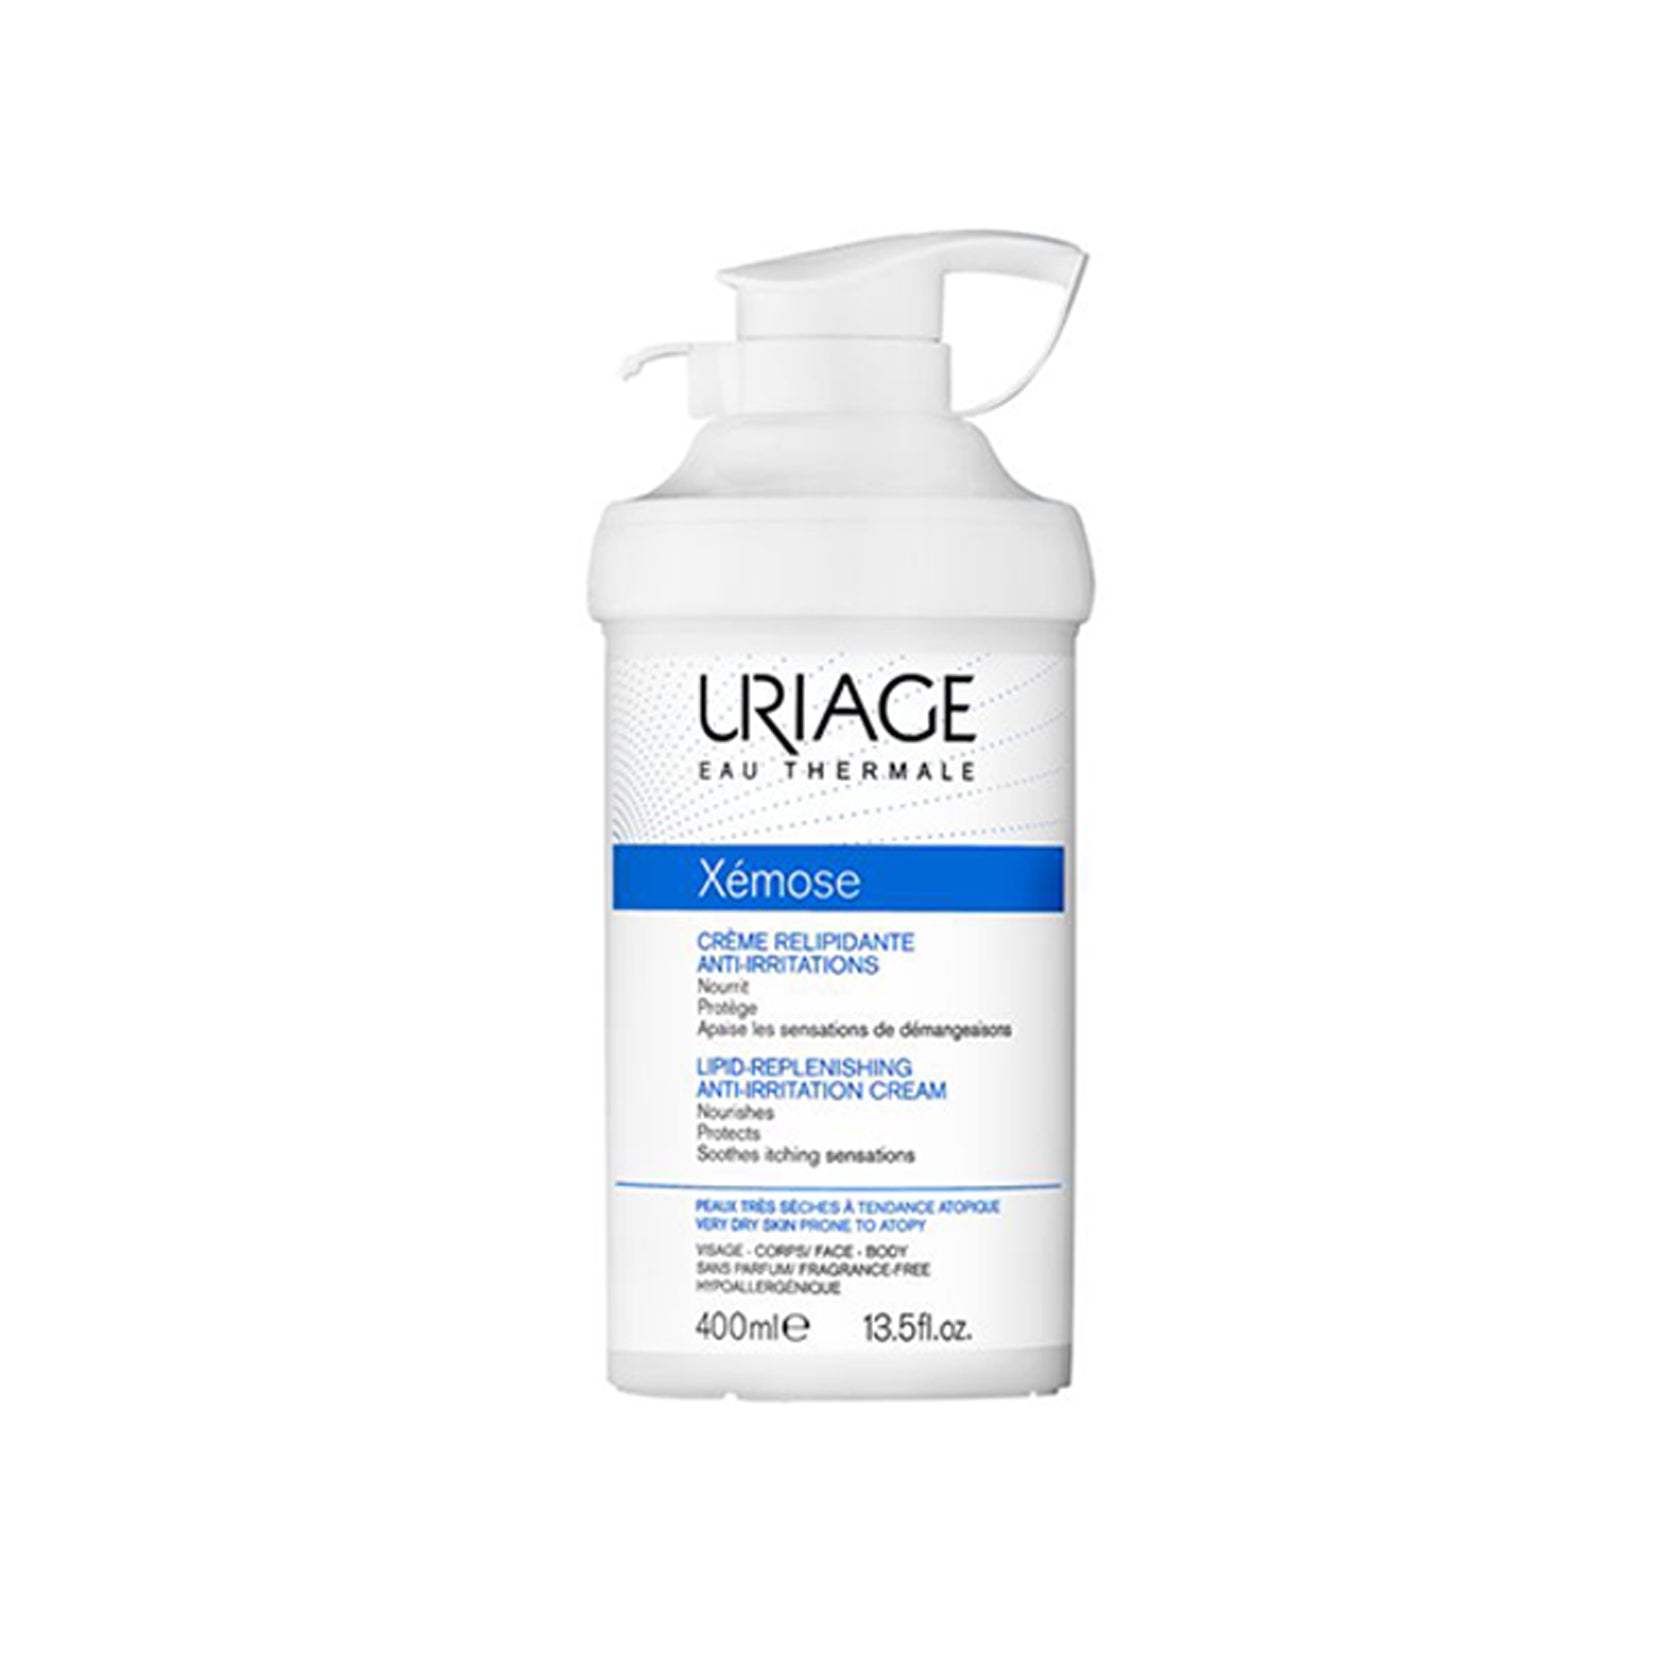 Uriage Xémose Lipid-Replenishing Anti-Irritation Cream 400ml (13.53fl oz)